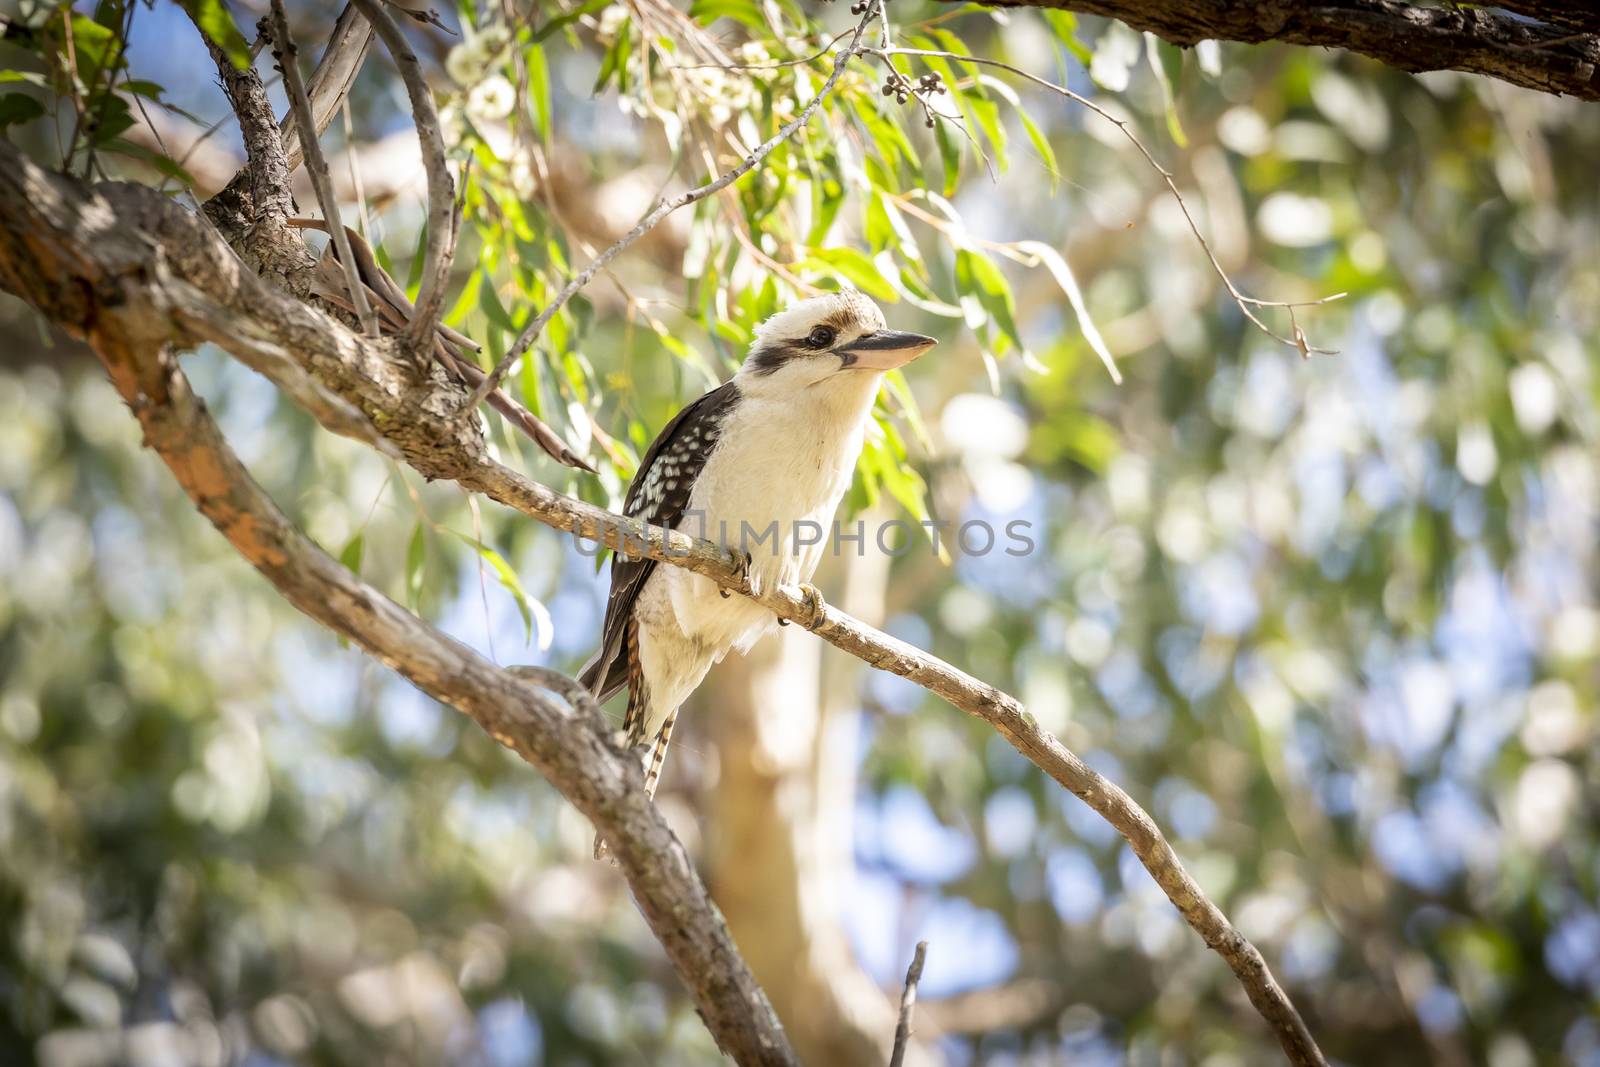 An Australian Kookaburra sitting on a branch in a tree by WittkePhotos